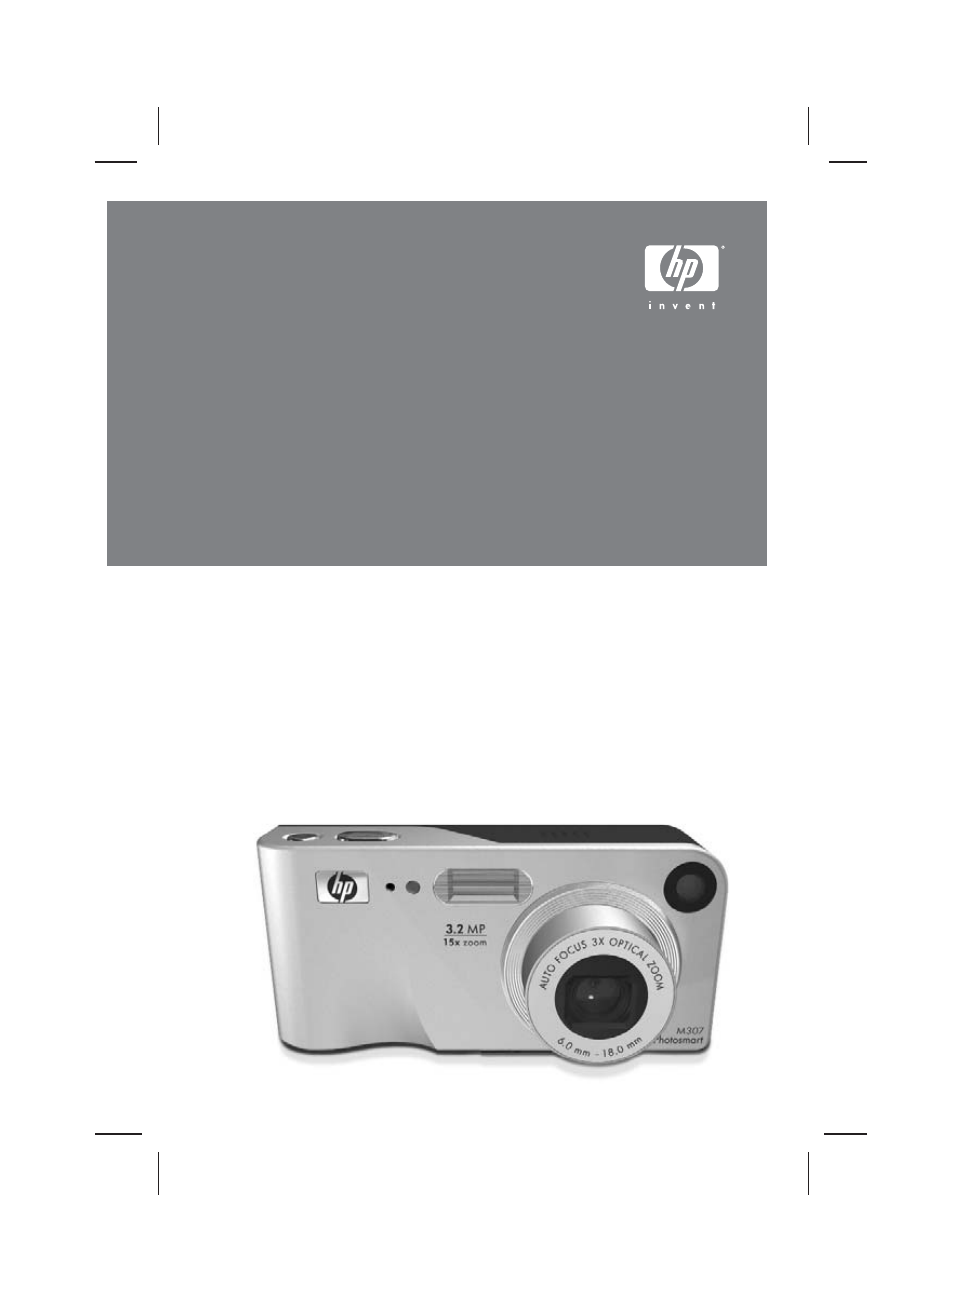 ge x400 camera software download